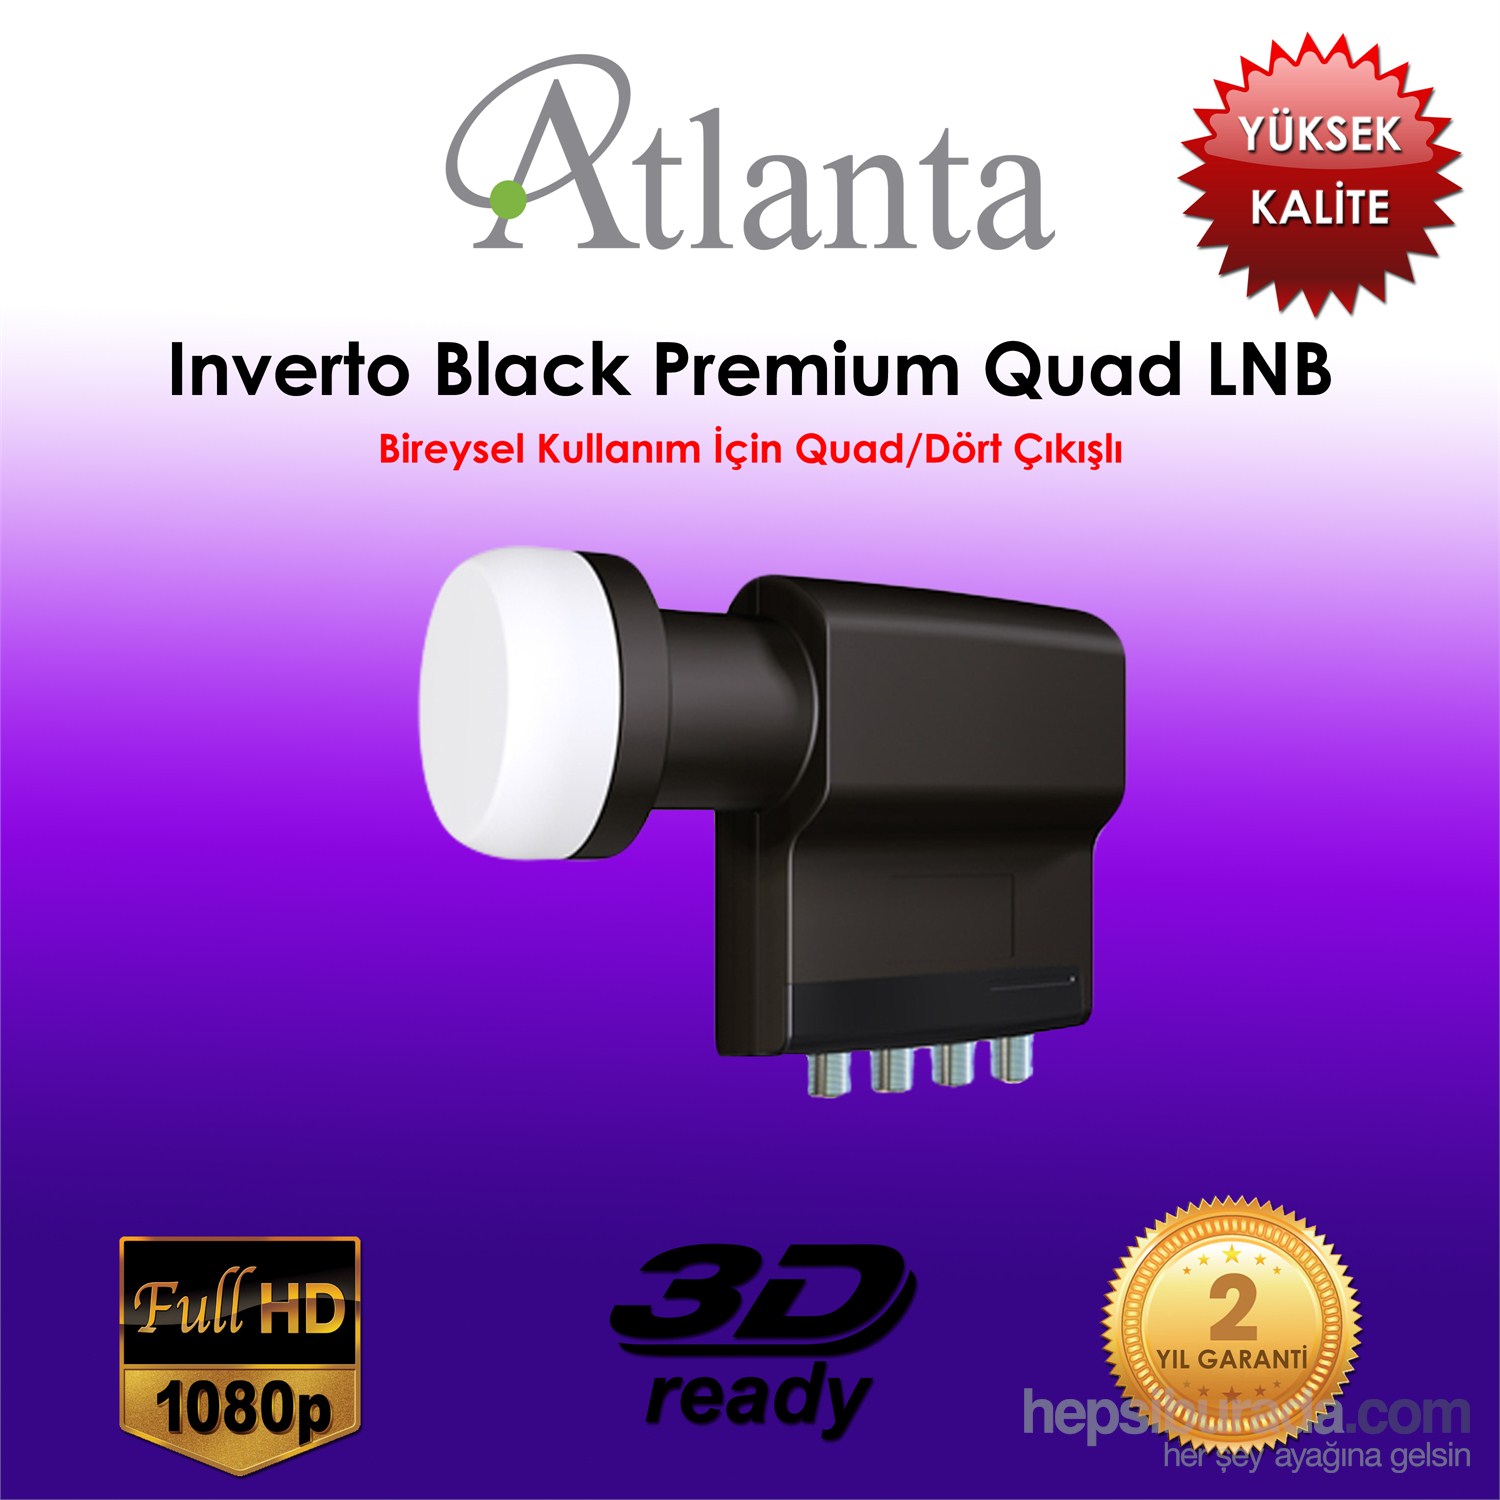 Atlanta Inverto Black Premium Quad LNB (Dört Çıkışlı - Bireysel Kullanım)